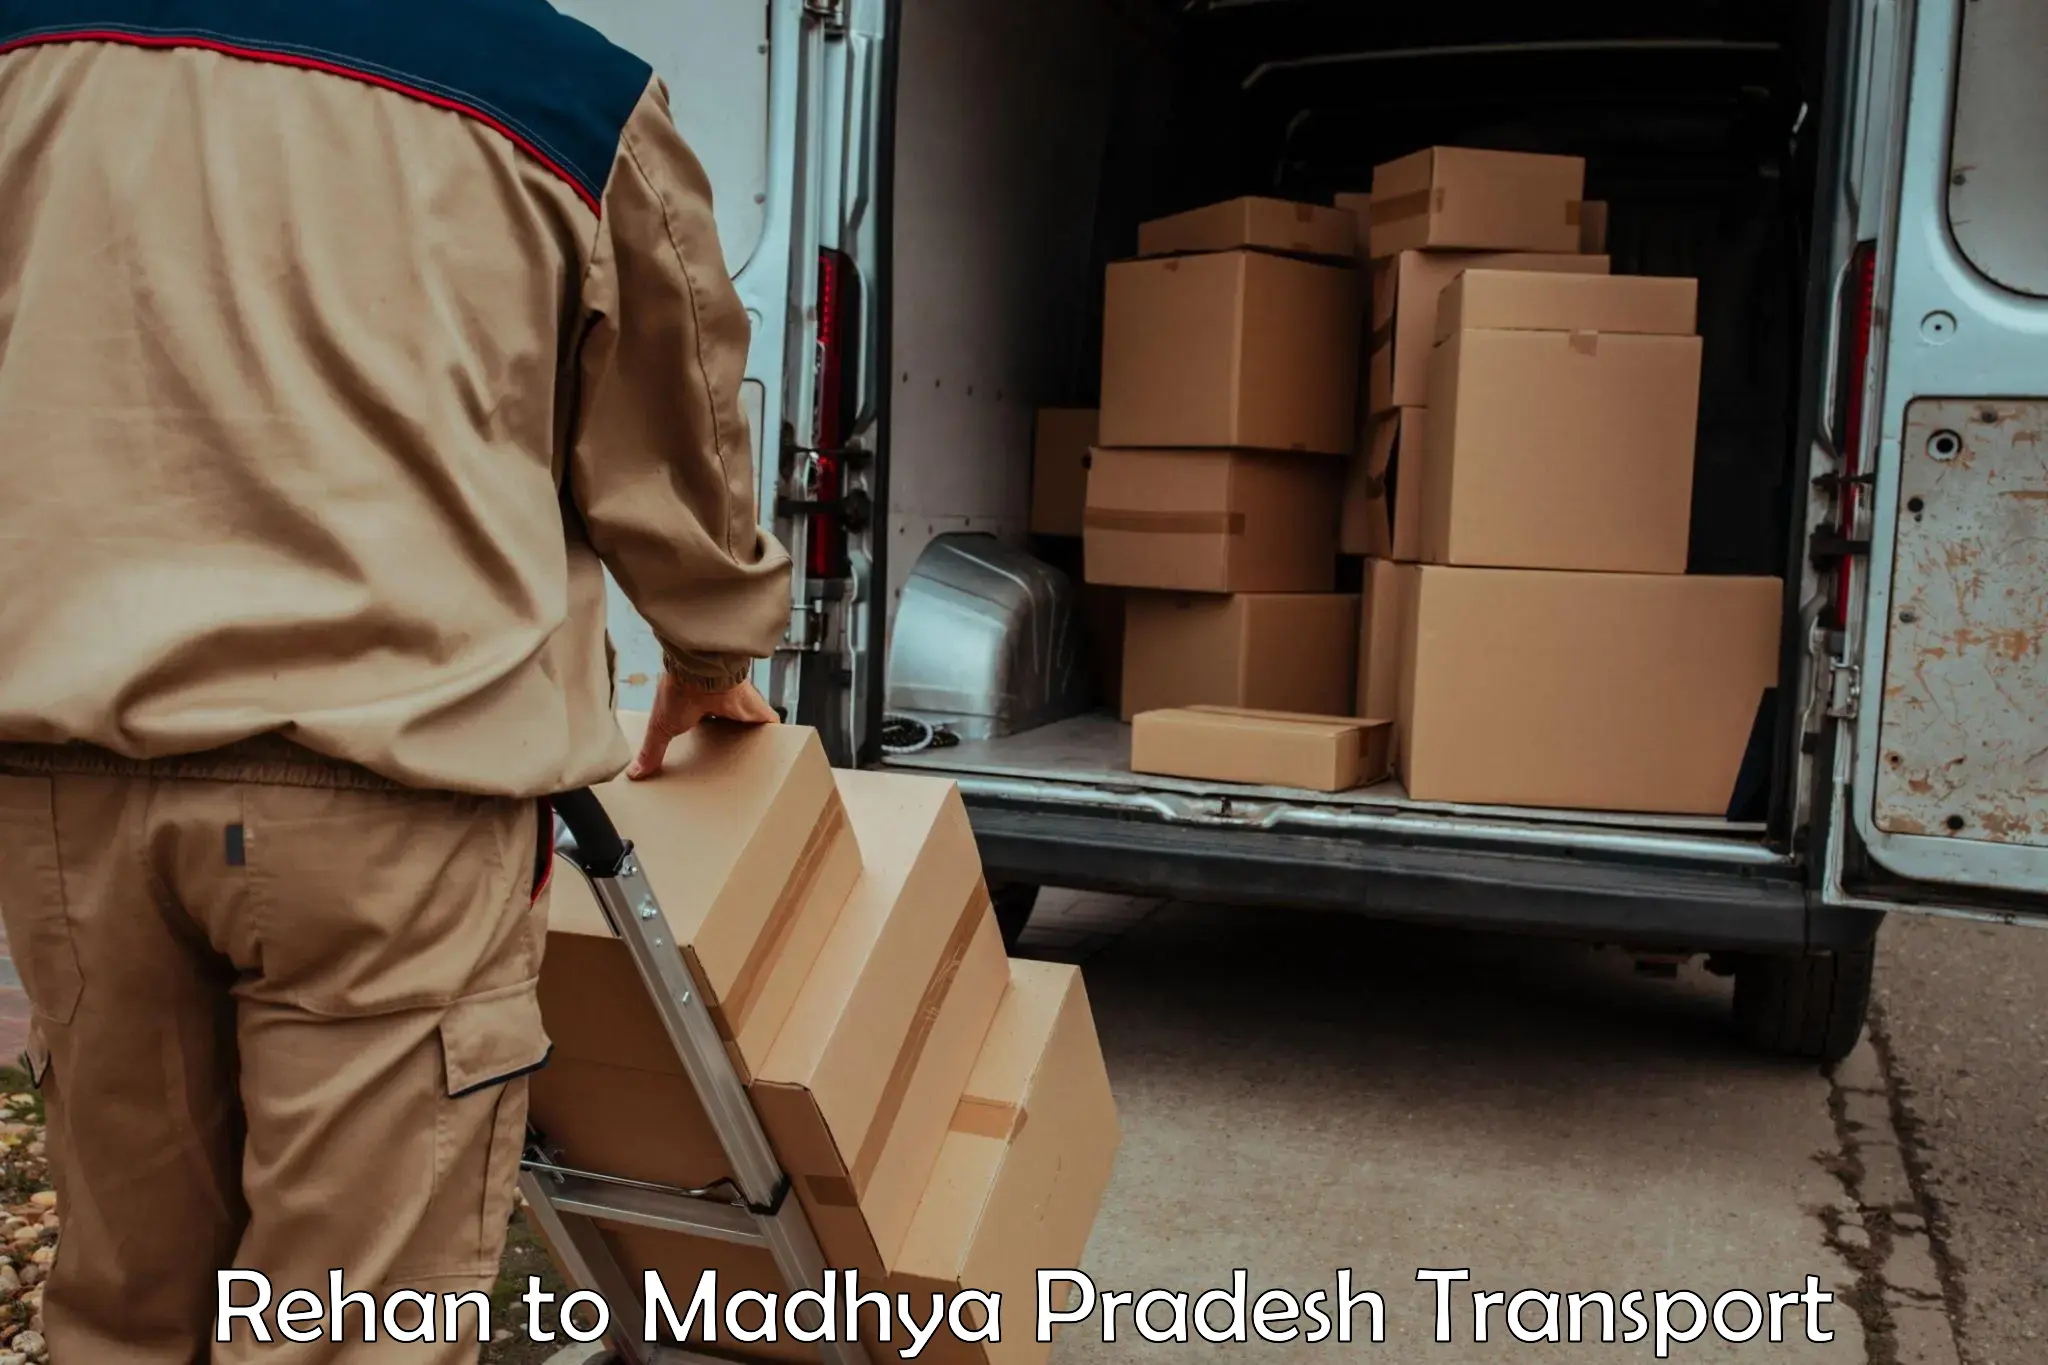 Truck transport companies in India Rehan to Shivpuri